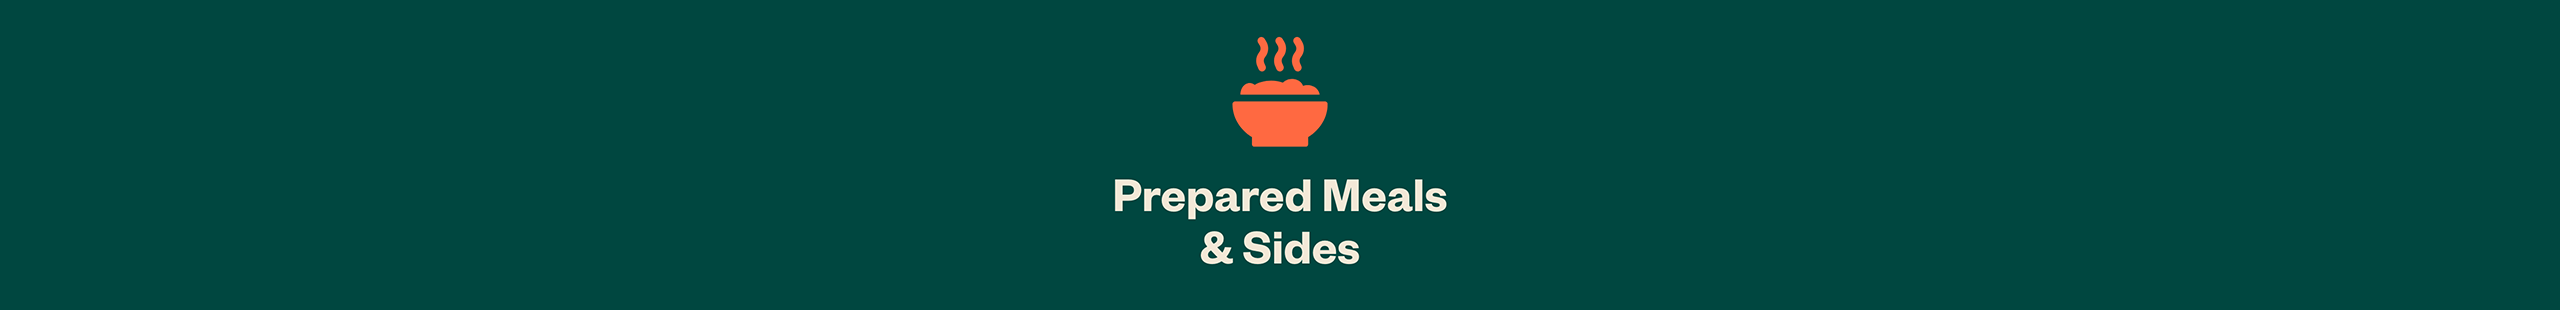 Prepared Meals & Sides